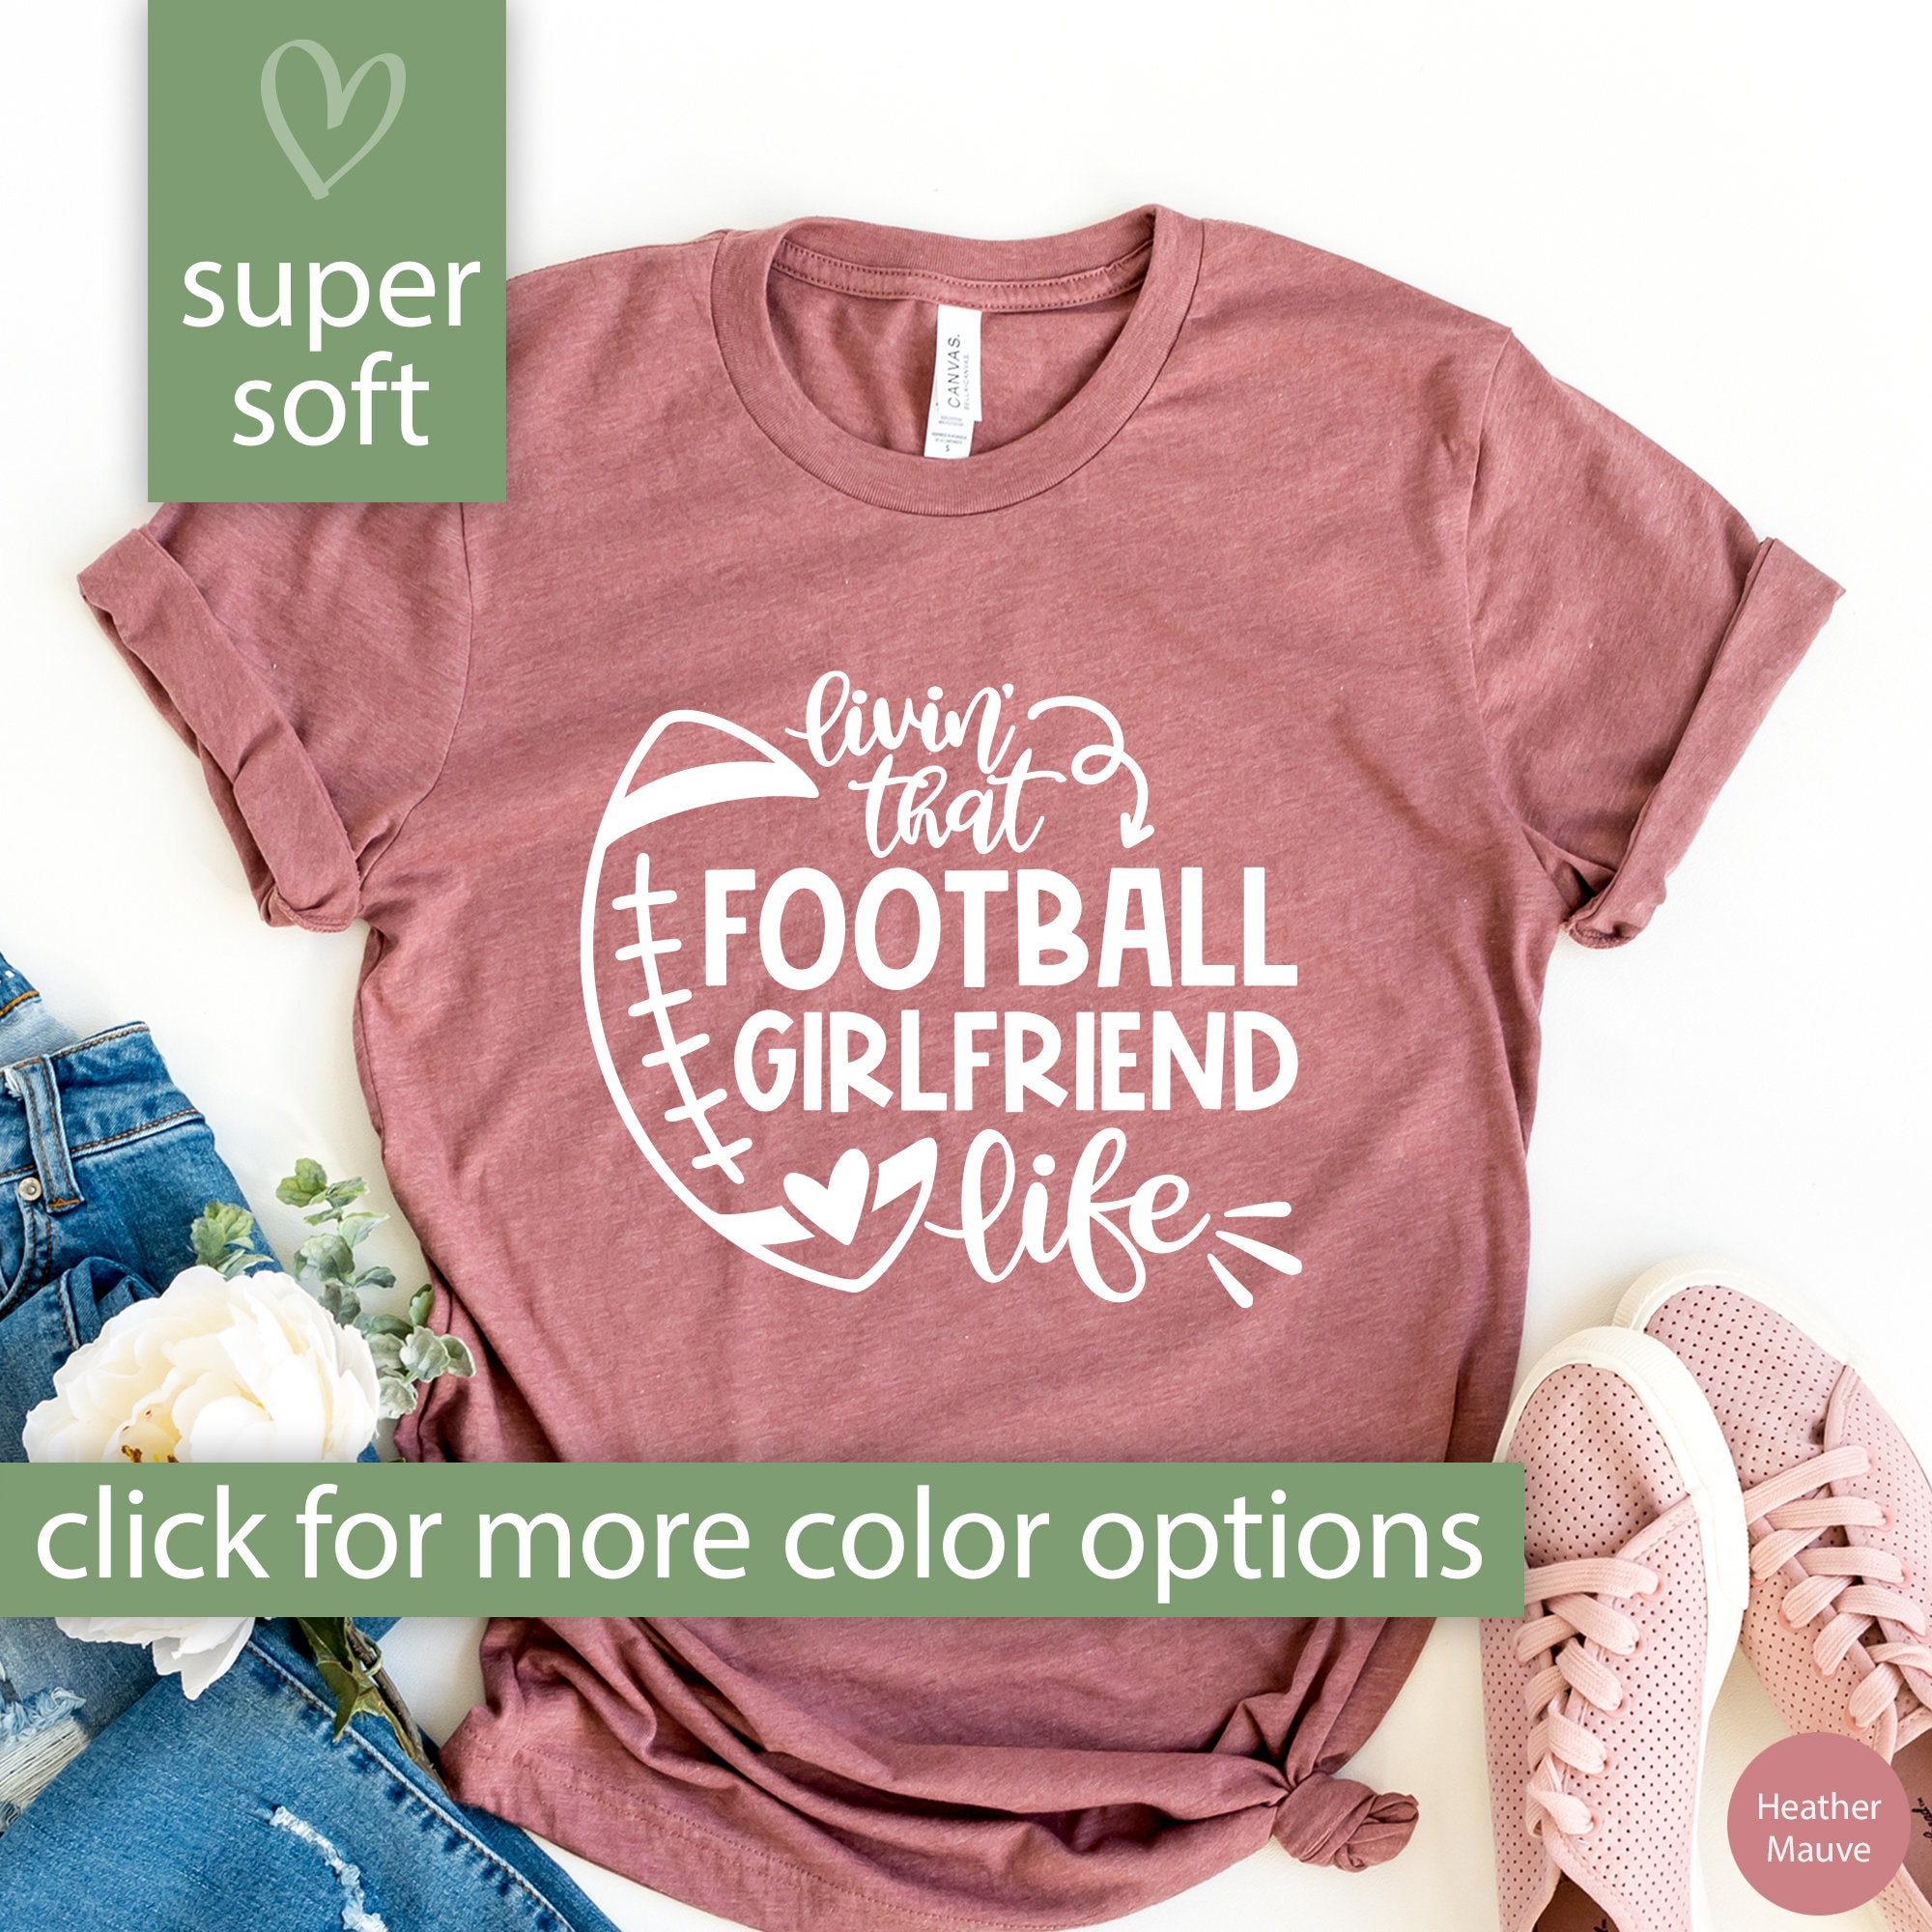 Best of Football shirts for girlfriends